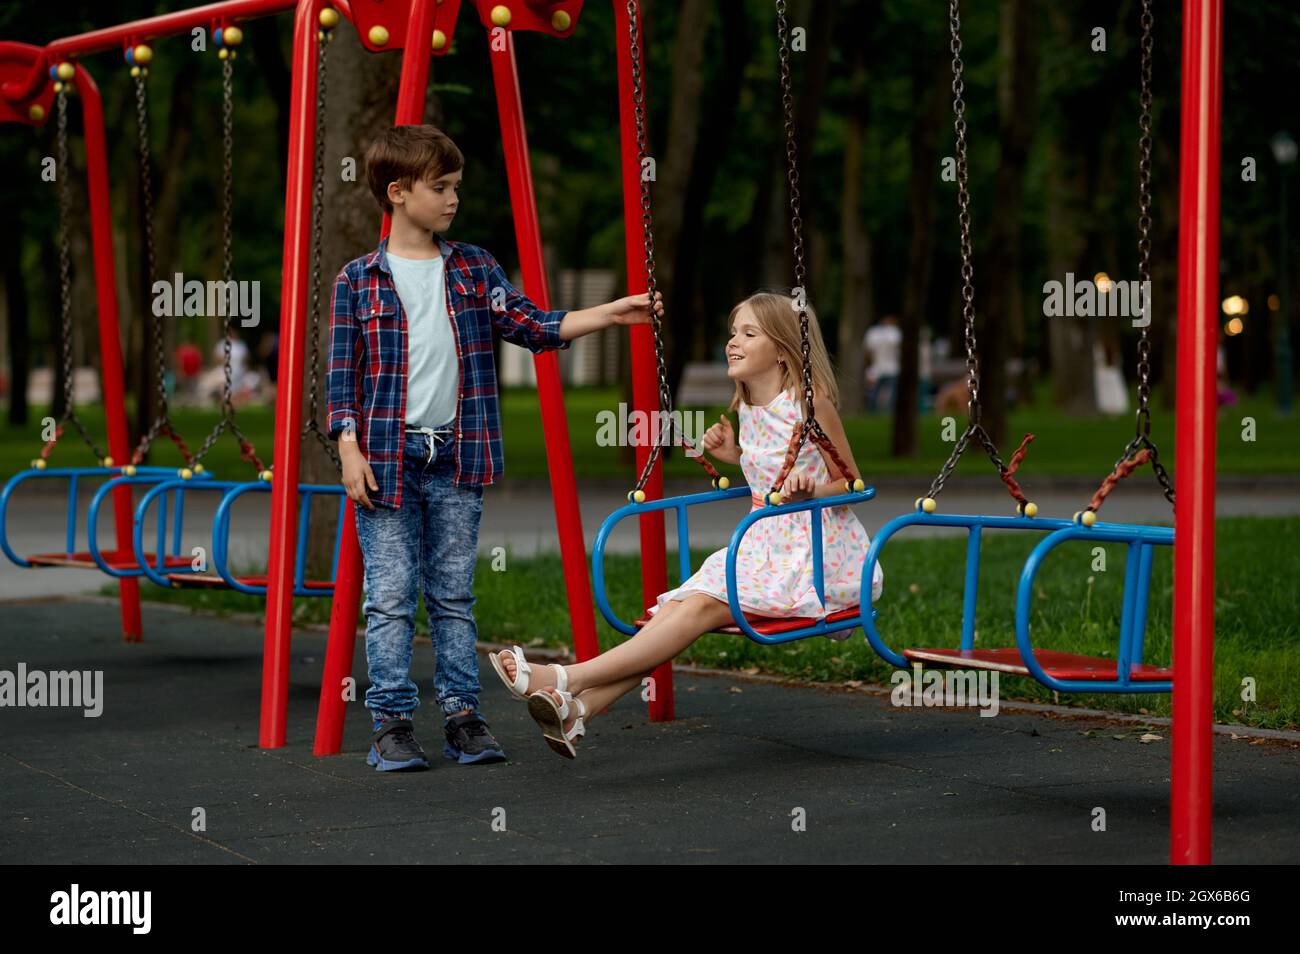 Children's romantic date, boy and girl on swings Stock Photo